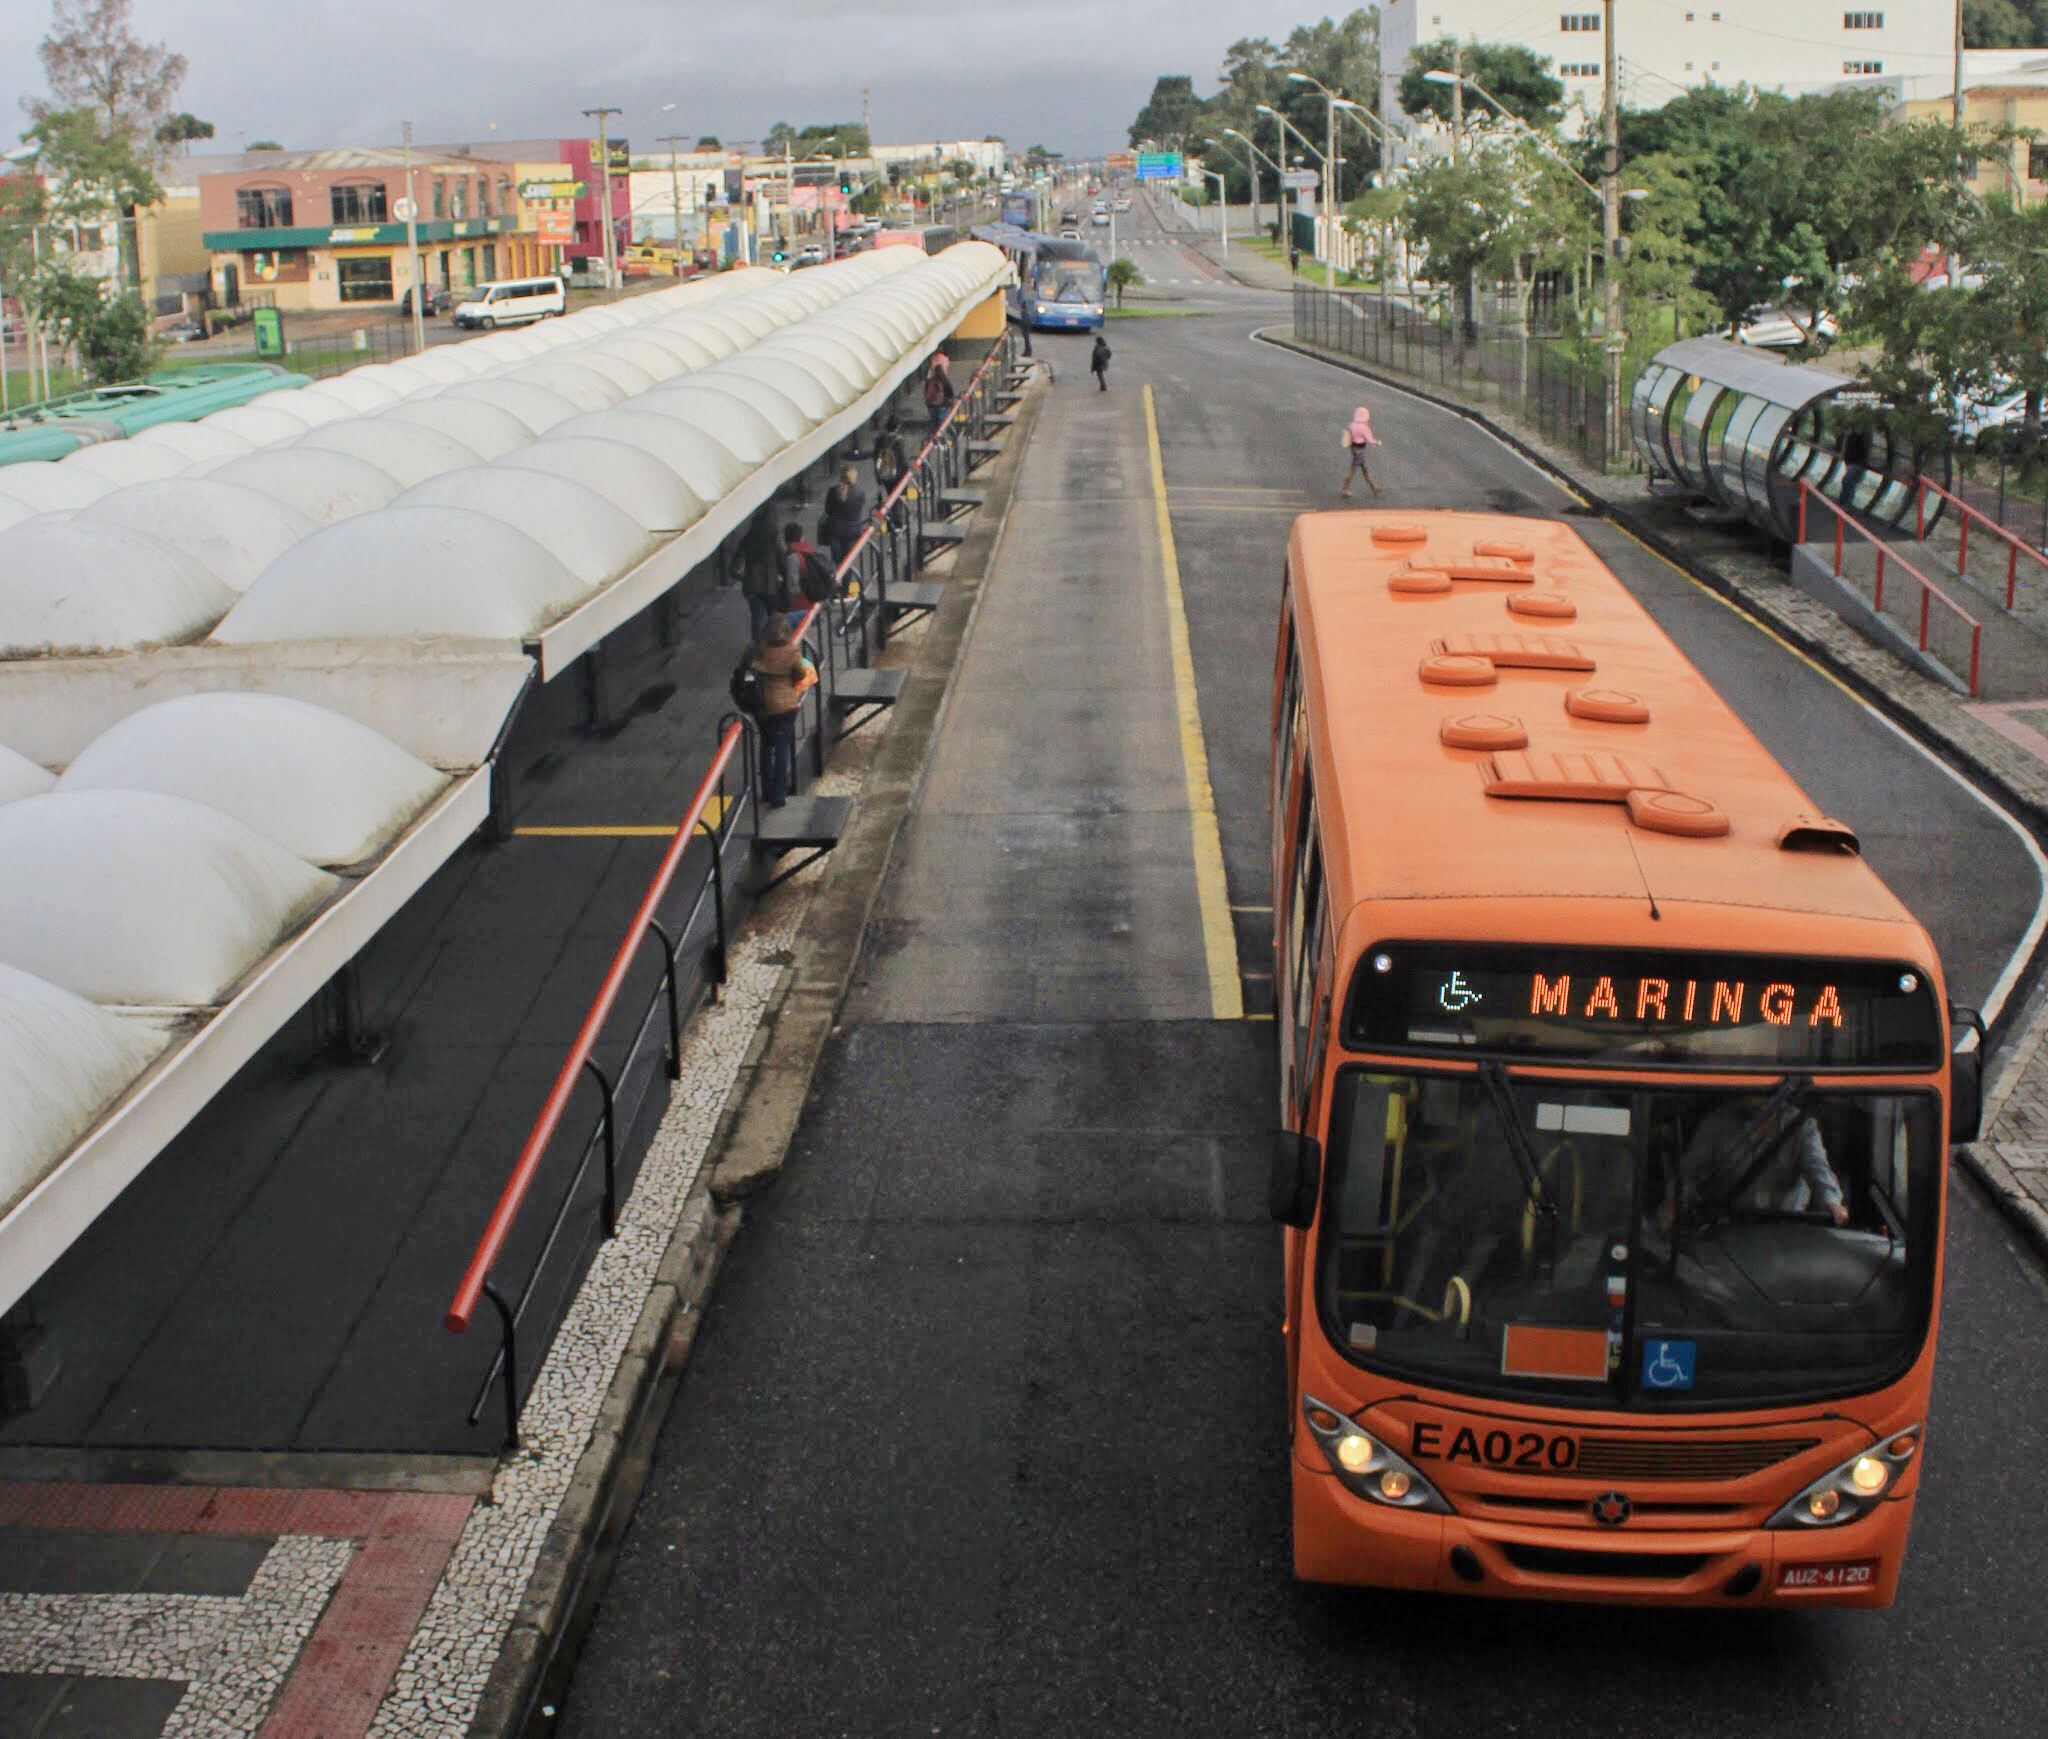 Transporte público de Curitiba enfrenta declínio econômico